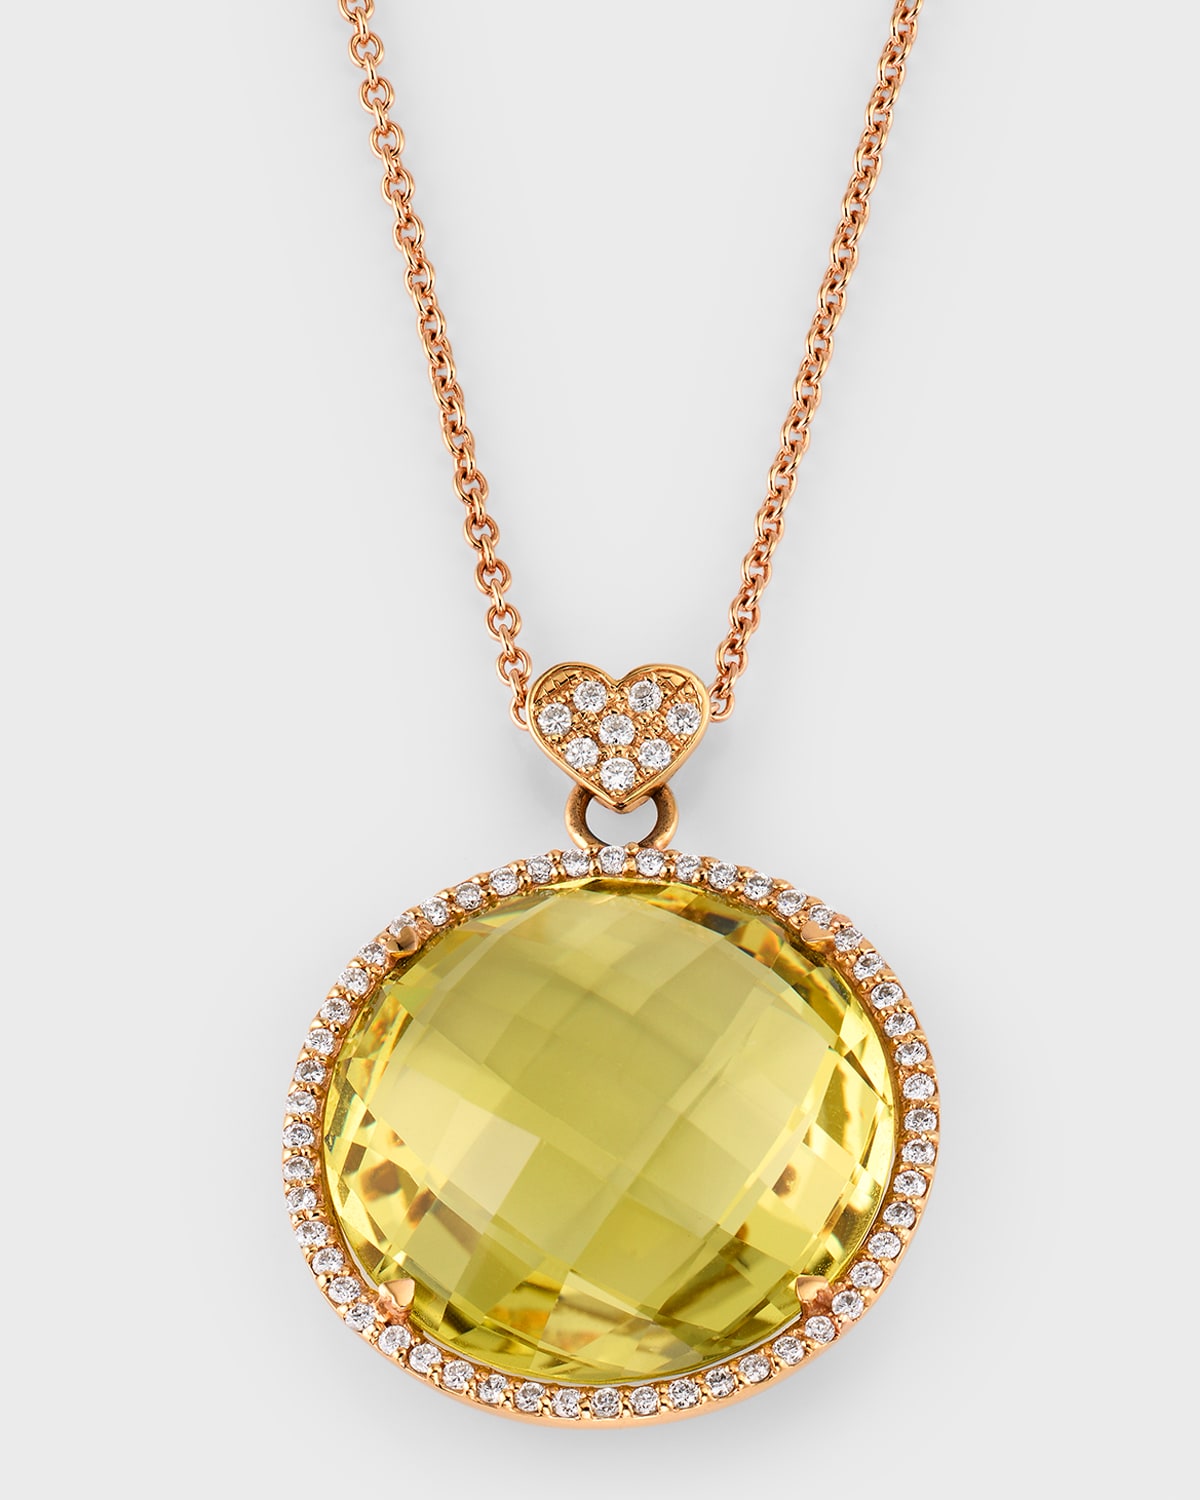 Lisa Nik 18k Rose Gold Lemon Quartz And Diamond Pendant Necklace With Heart Bail